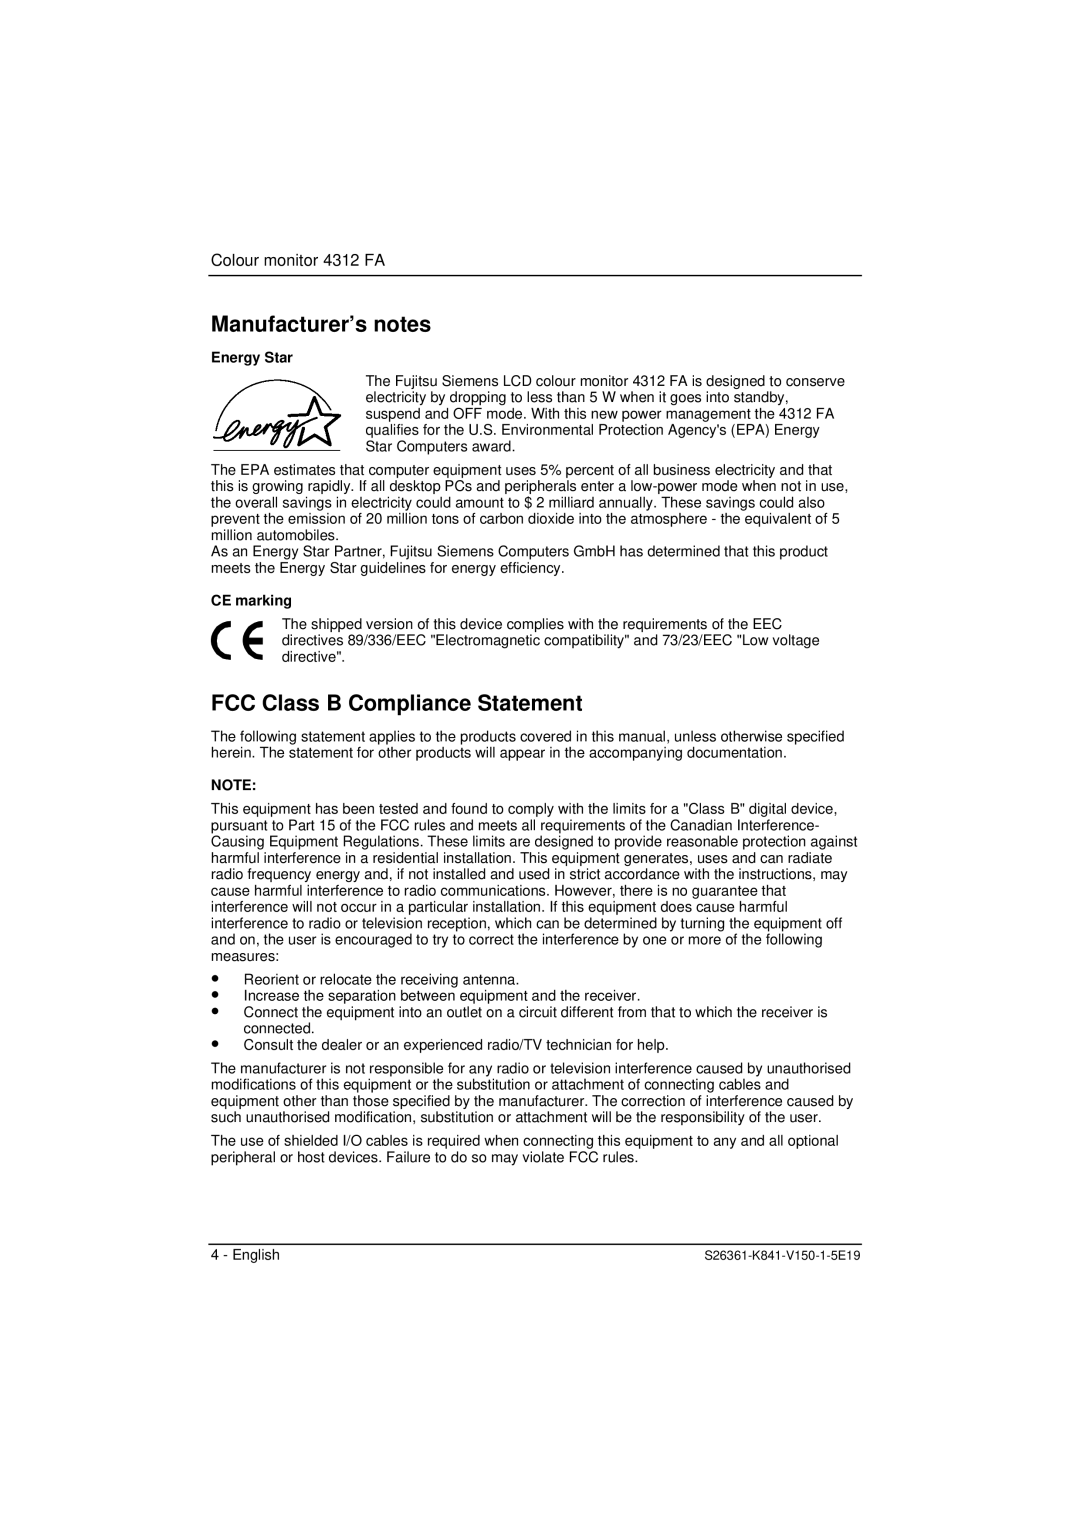 Fujitsu 4312 FA manual Manufacturer’s notes, FCC Class B Compliance Statement, Energy Star, CE marking 